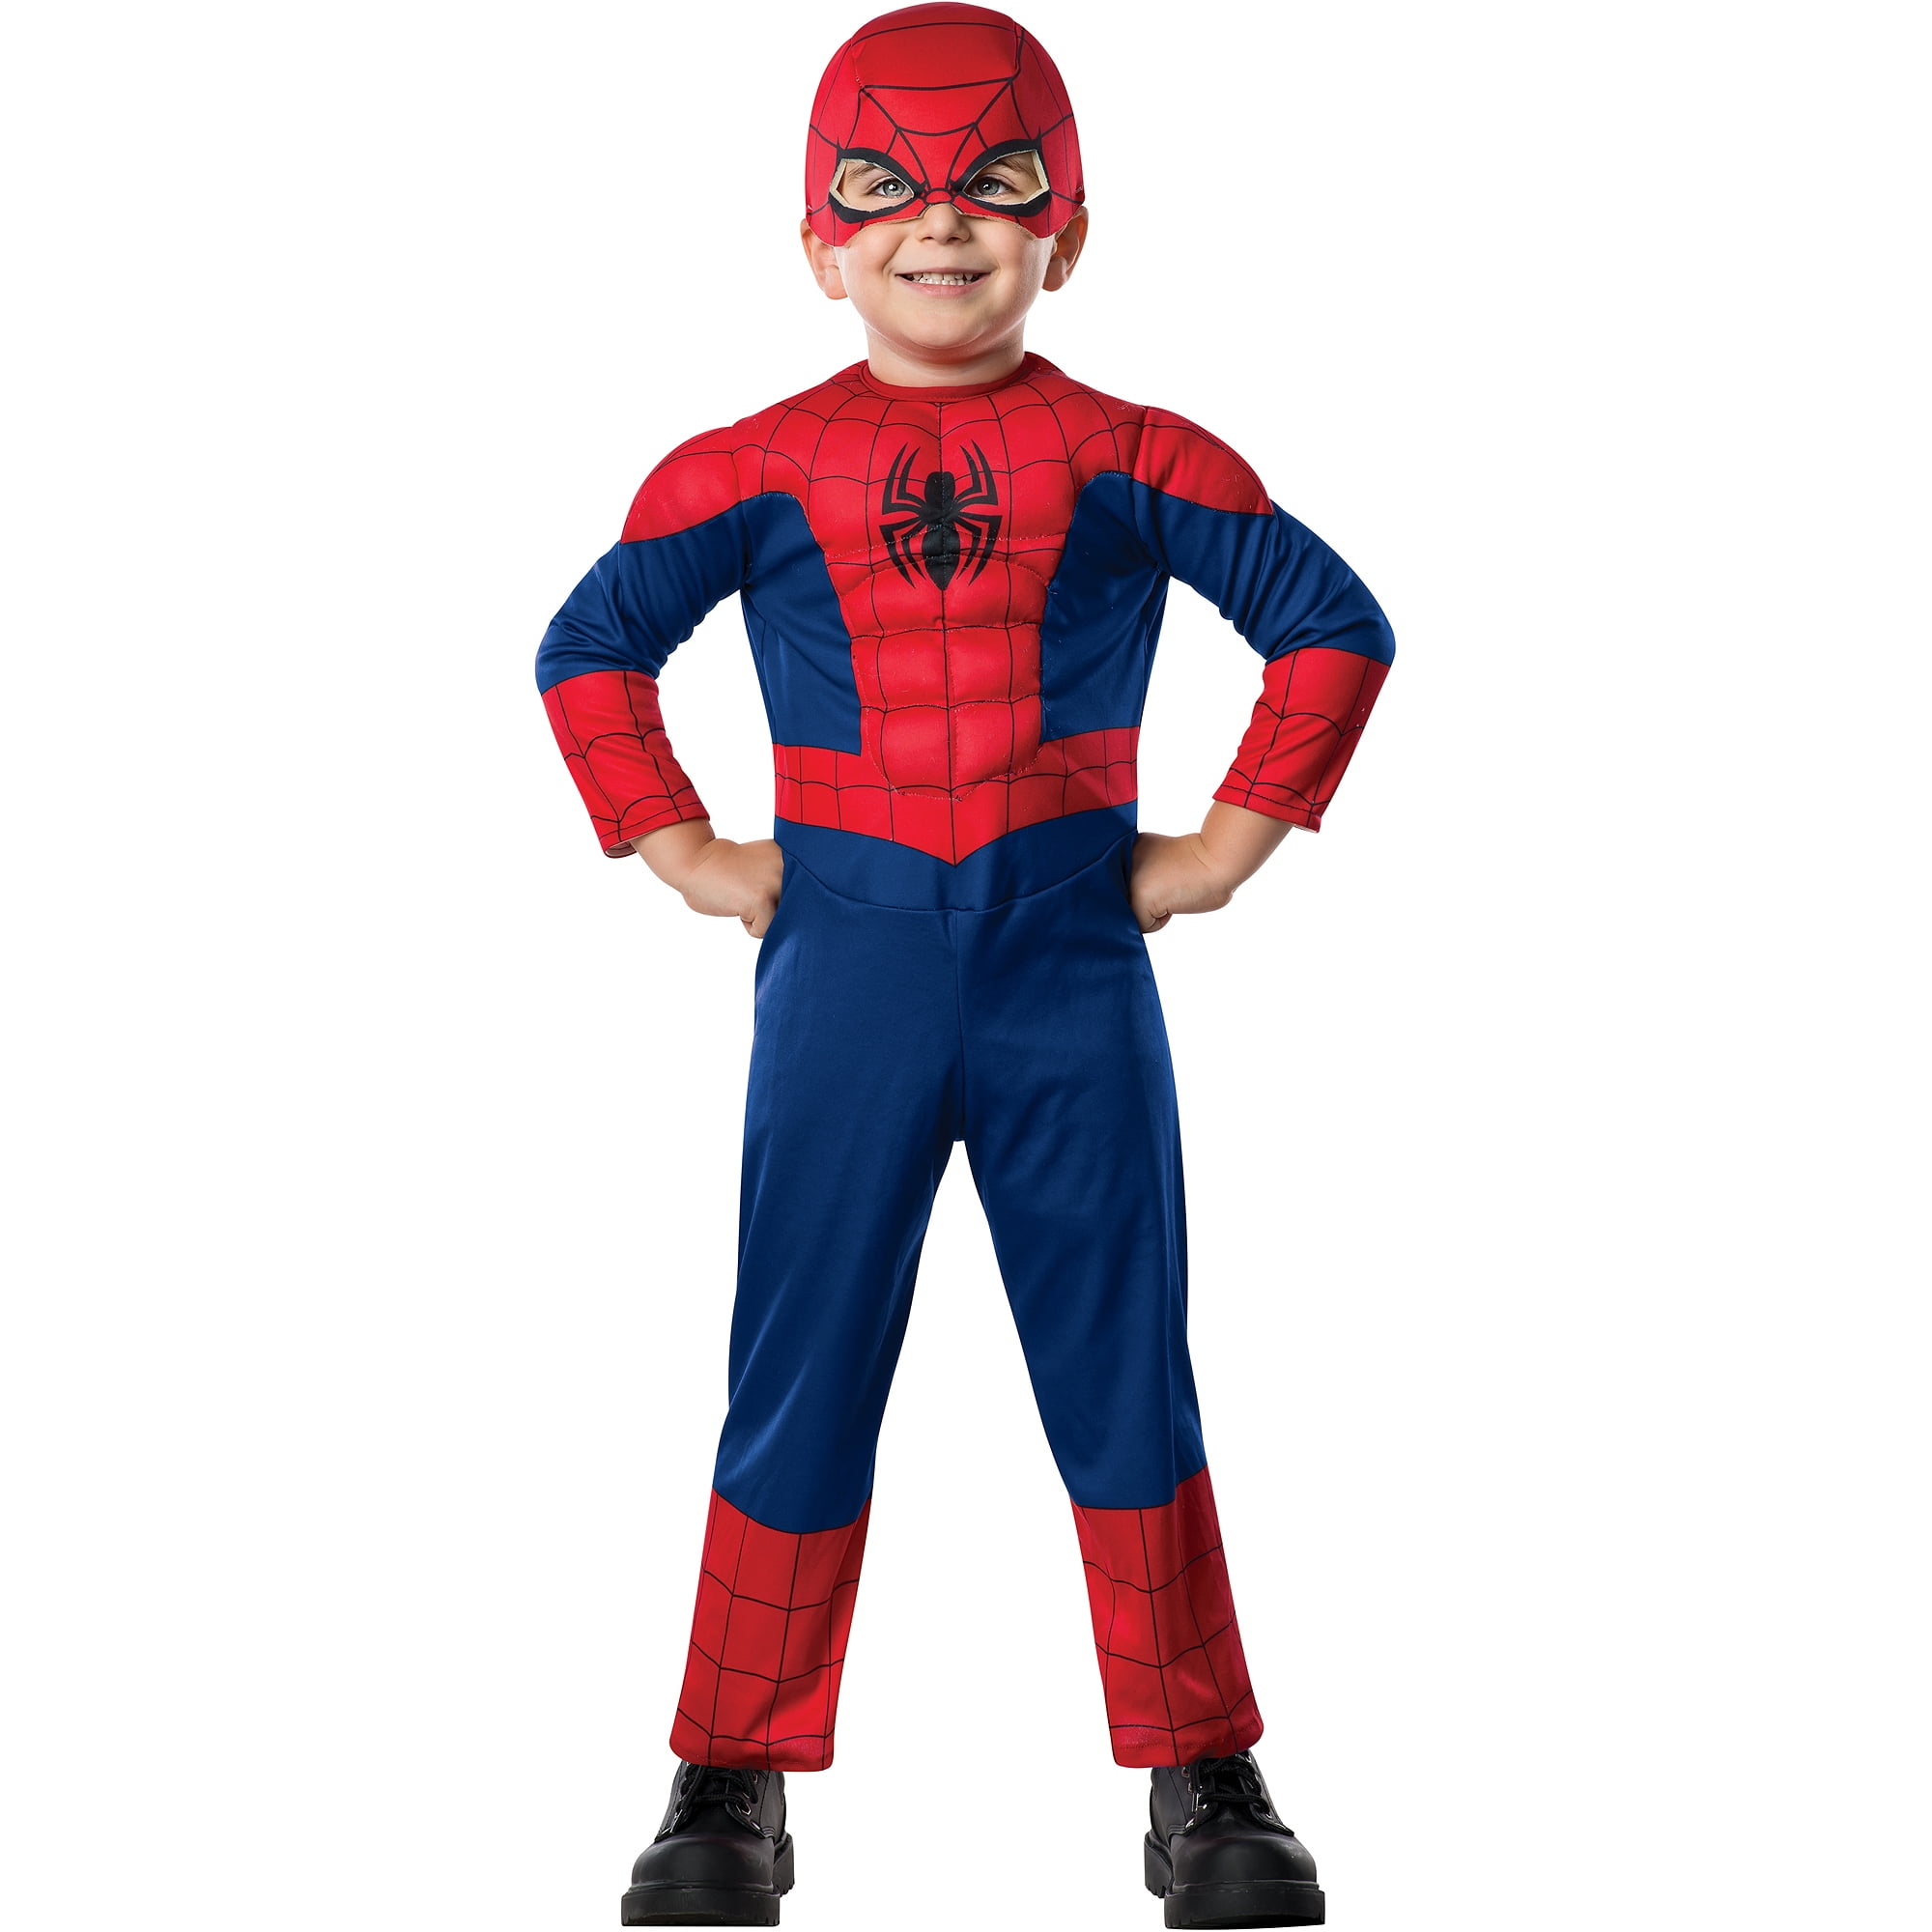 Amazing Spider-Man 2 Second Skin Suit